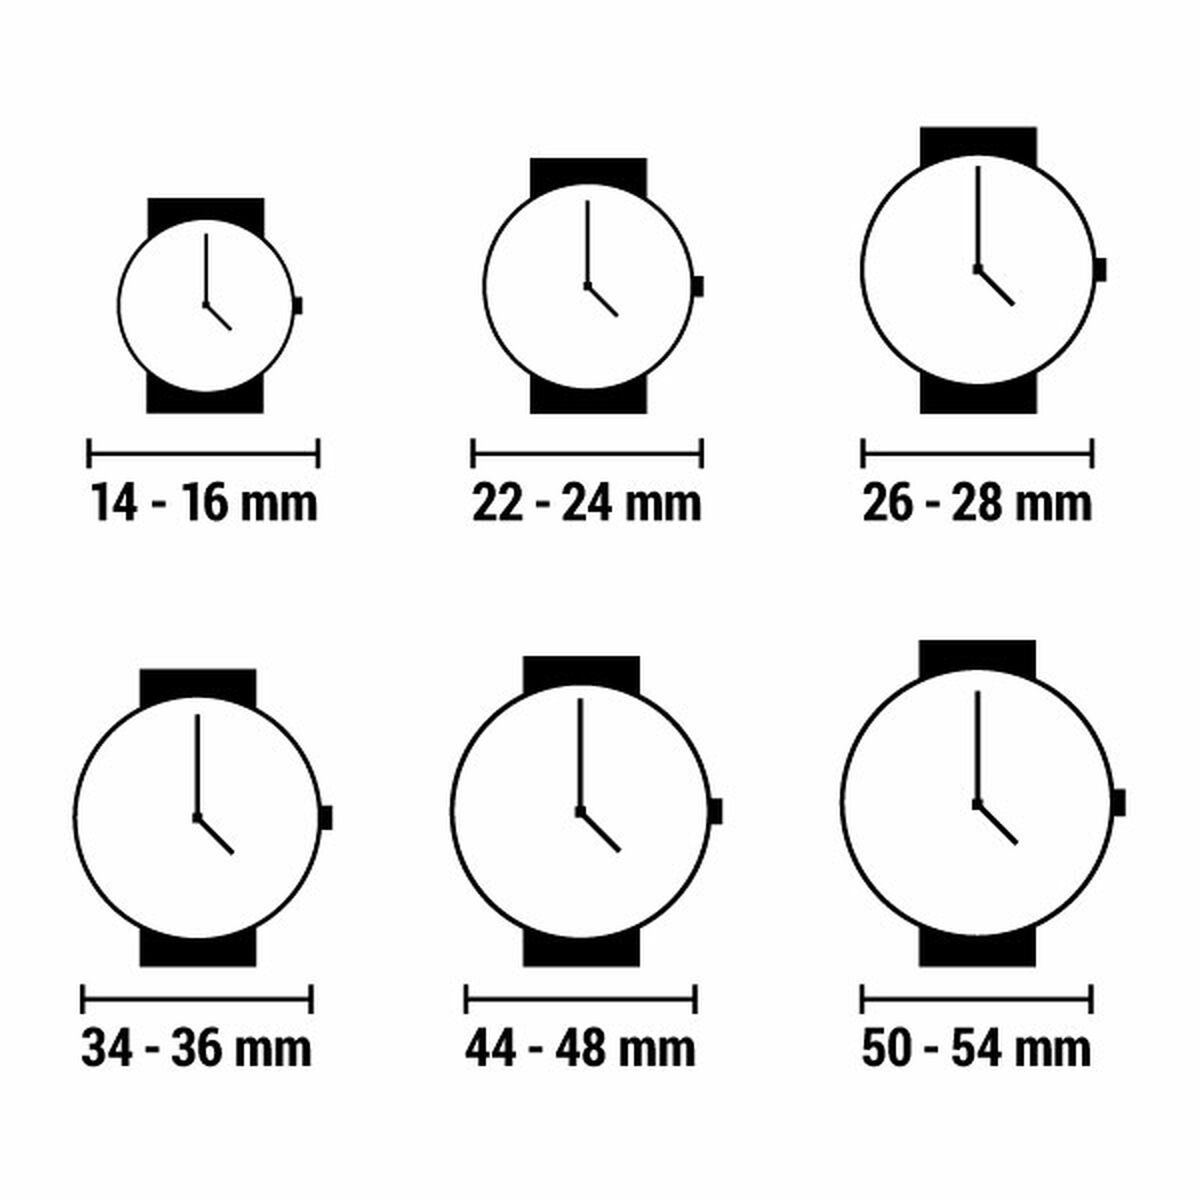 Horloge Dames Casio A163WA-1QES